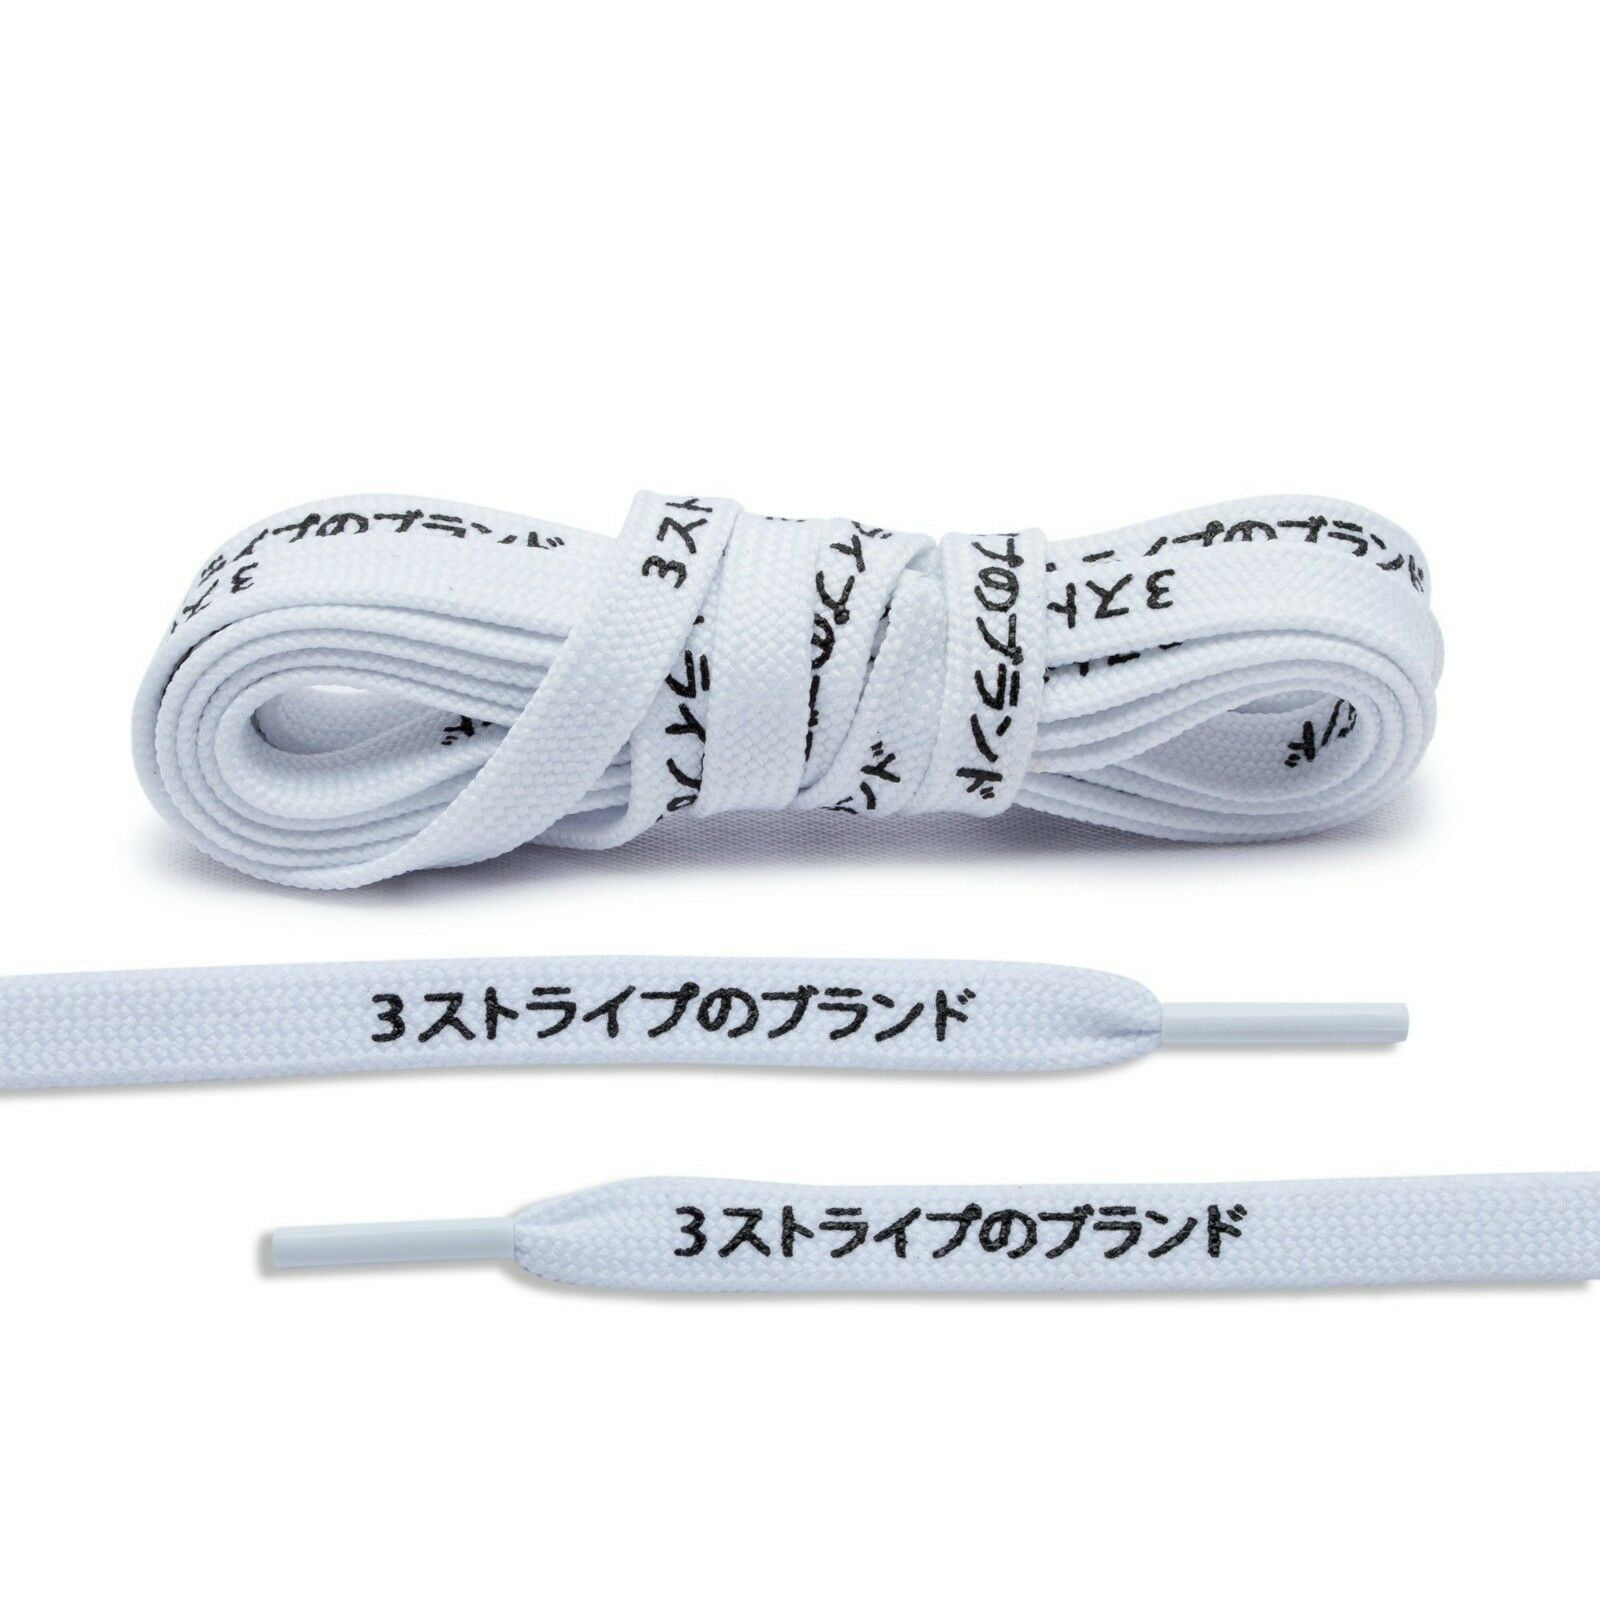 LACE LAB NMD Shoelaces Ultra Boost Laces "3 Stripes" Katakana Flat Black 30" 